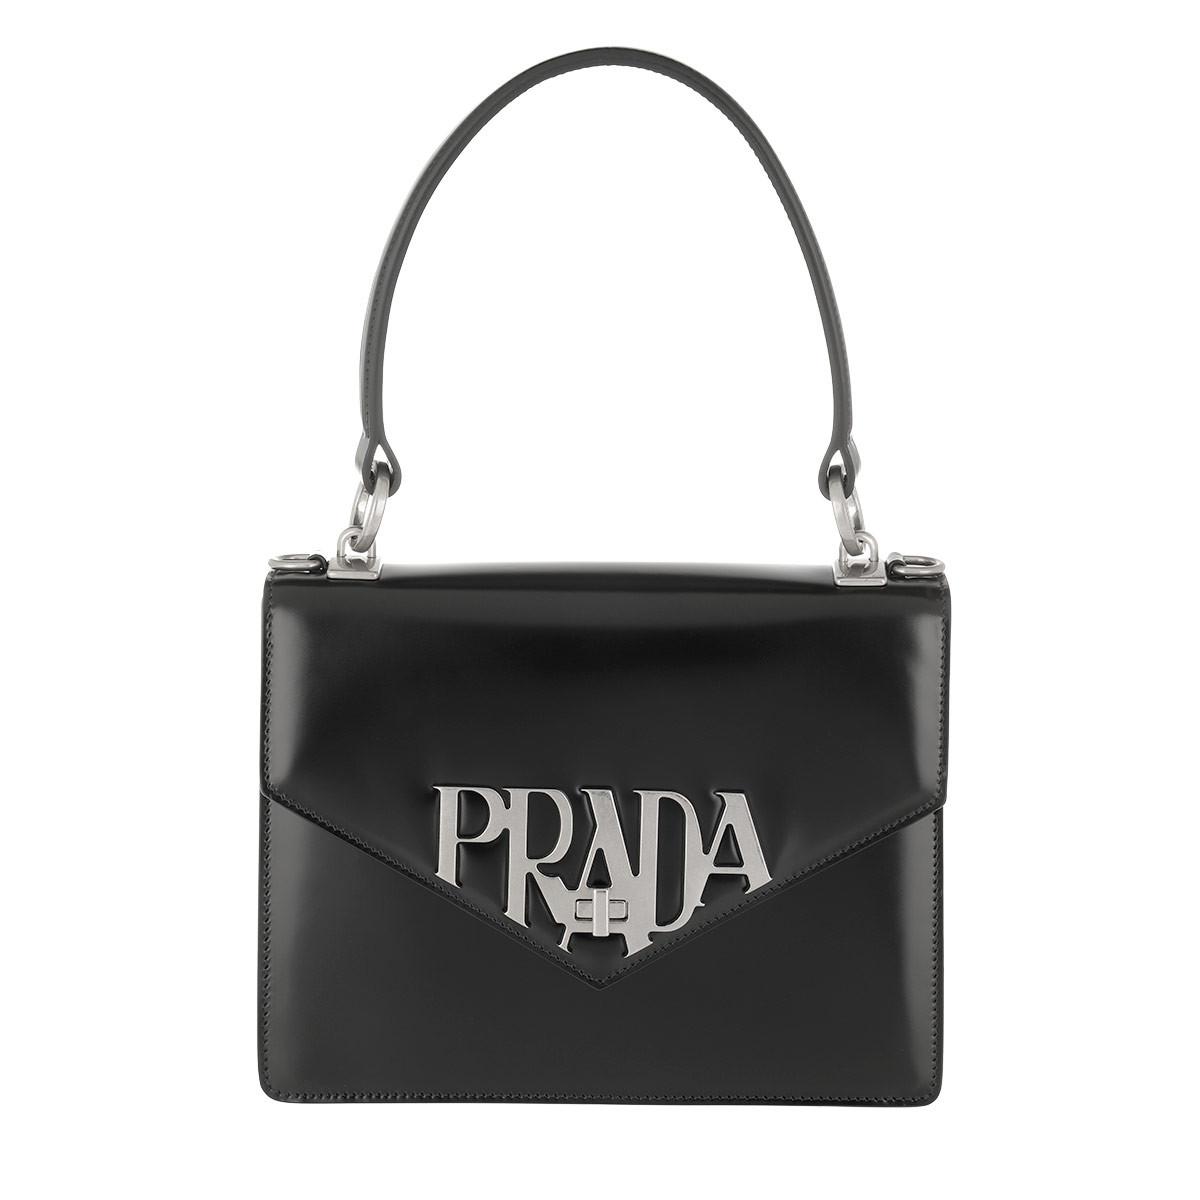 prada signature bag